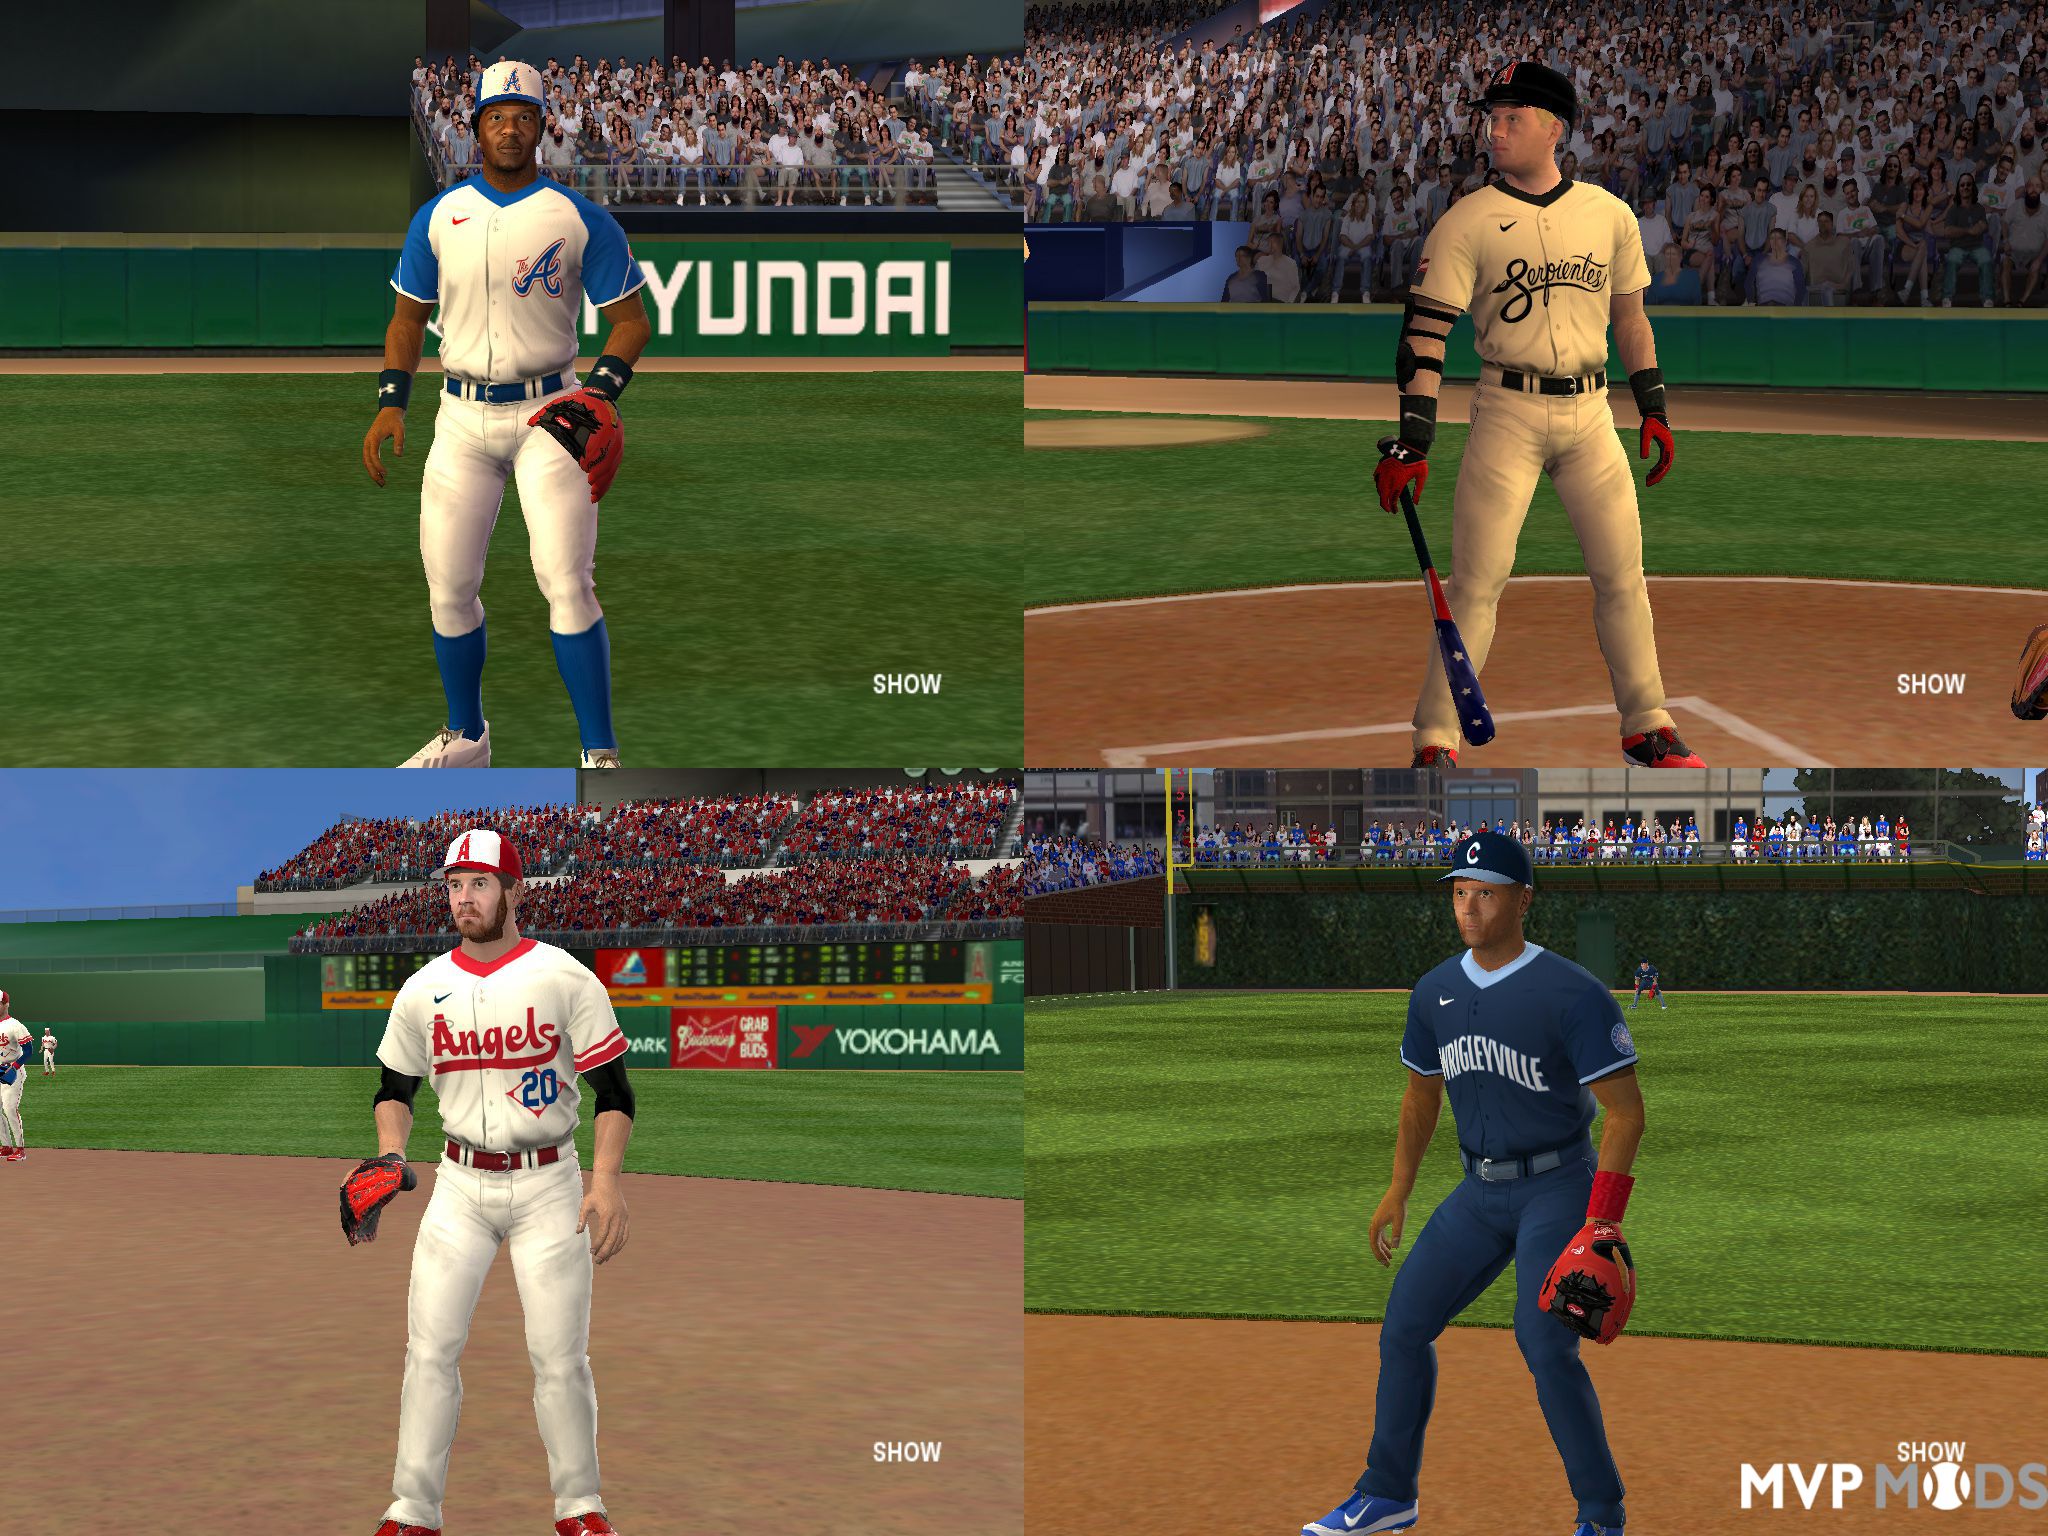 2018 New York Yankees uniforms - Uniforms - MVP Mods